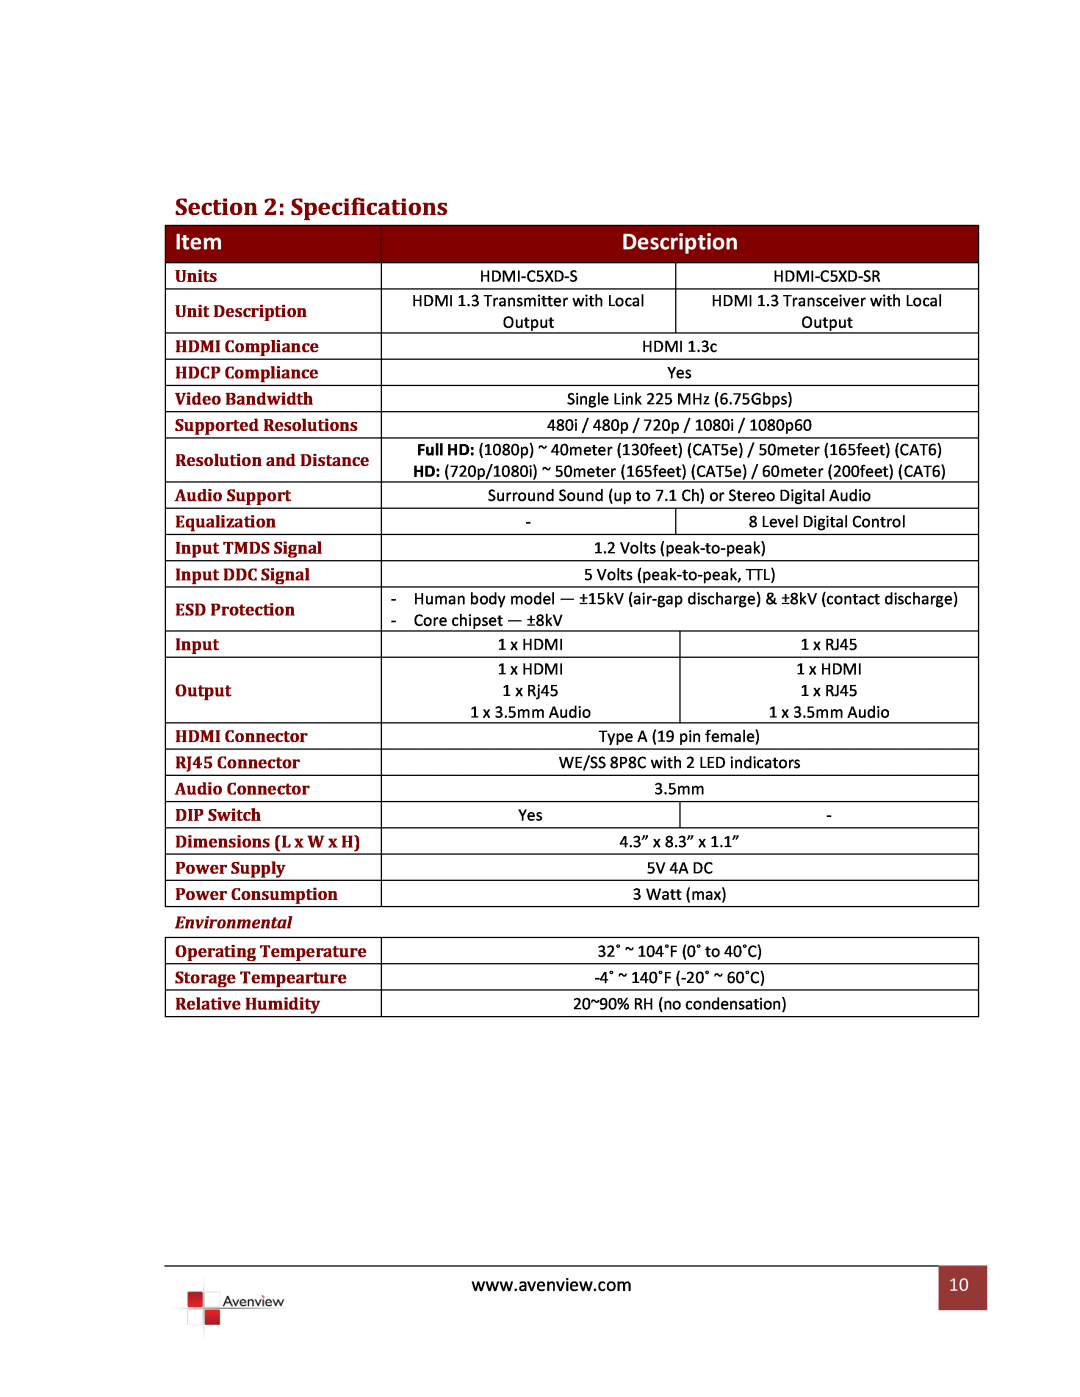 Avenview HDMI-C5XD-SR specifications Specifications, Description, Environmental 